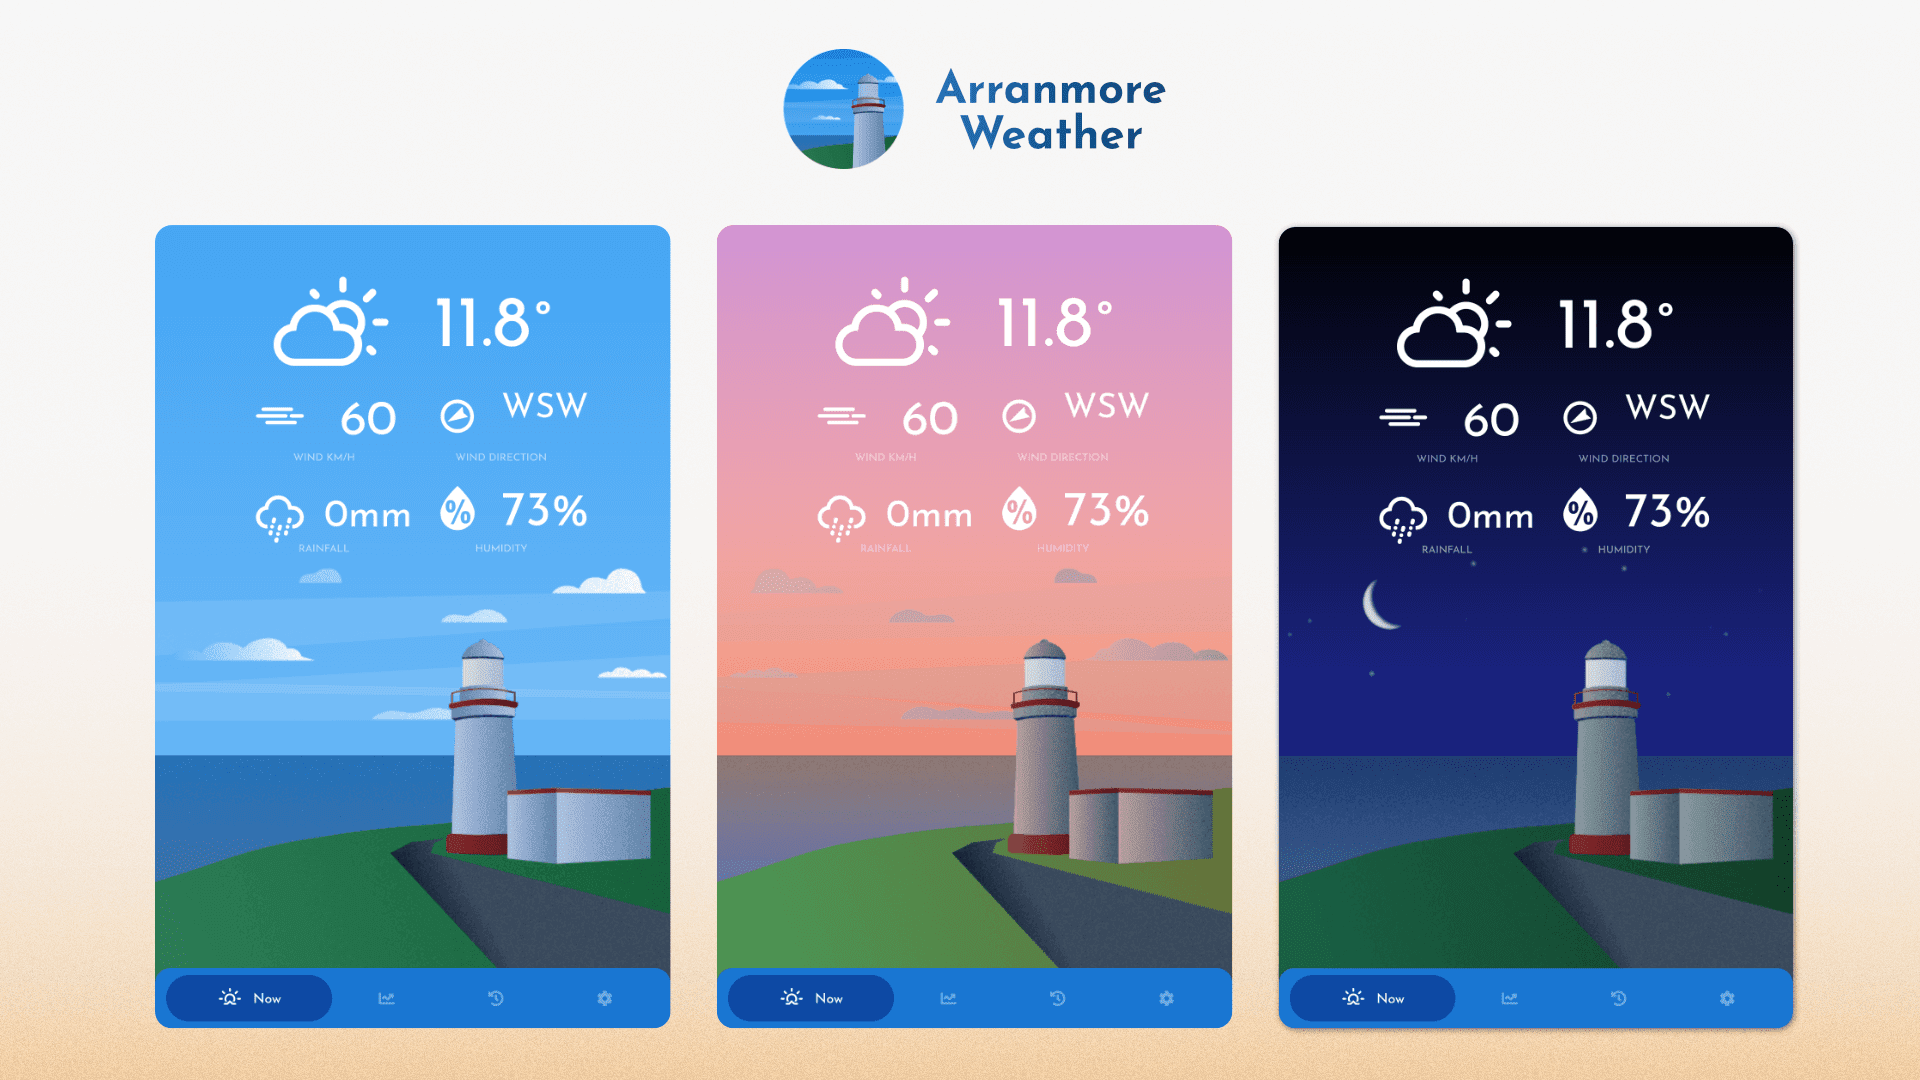 Arranmore Weather